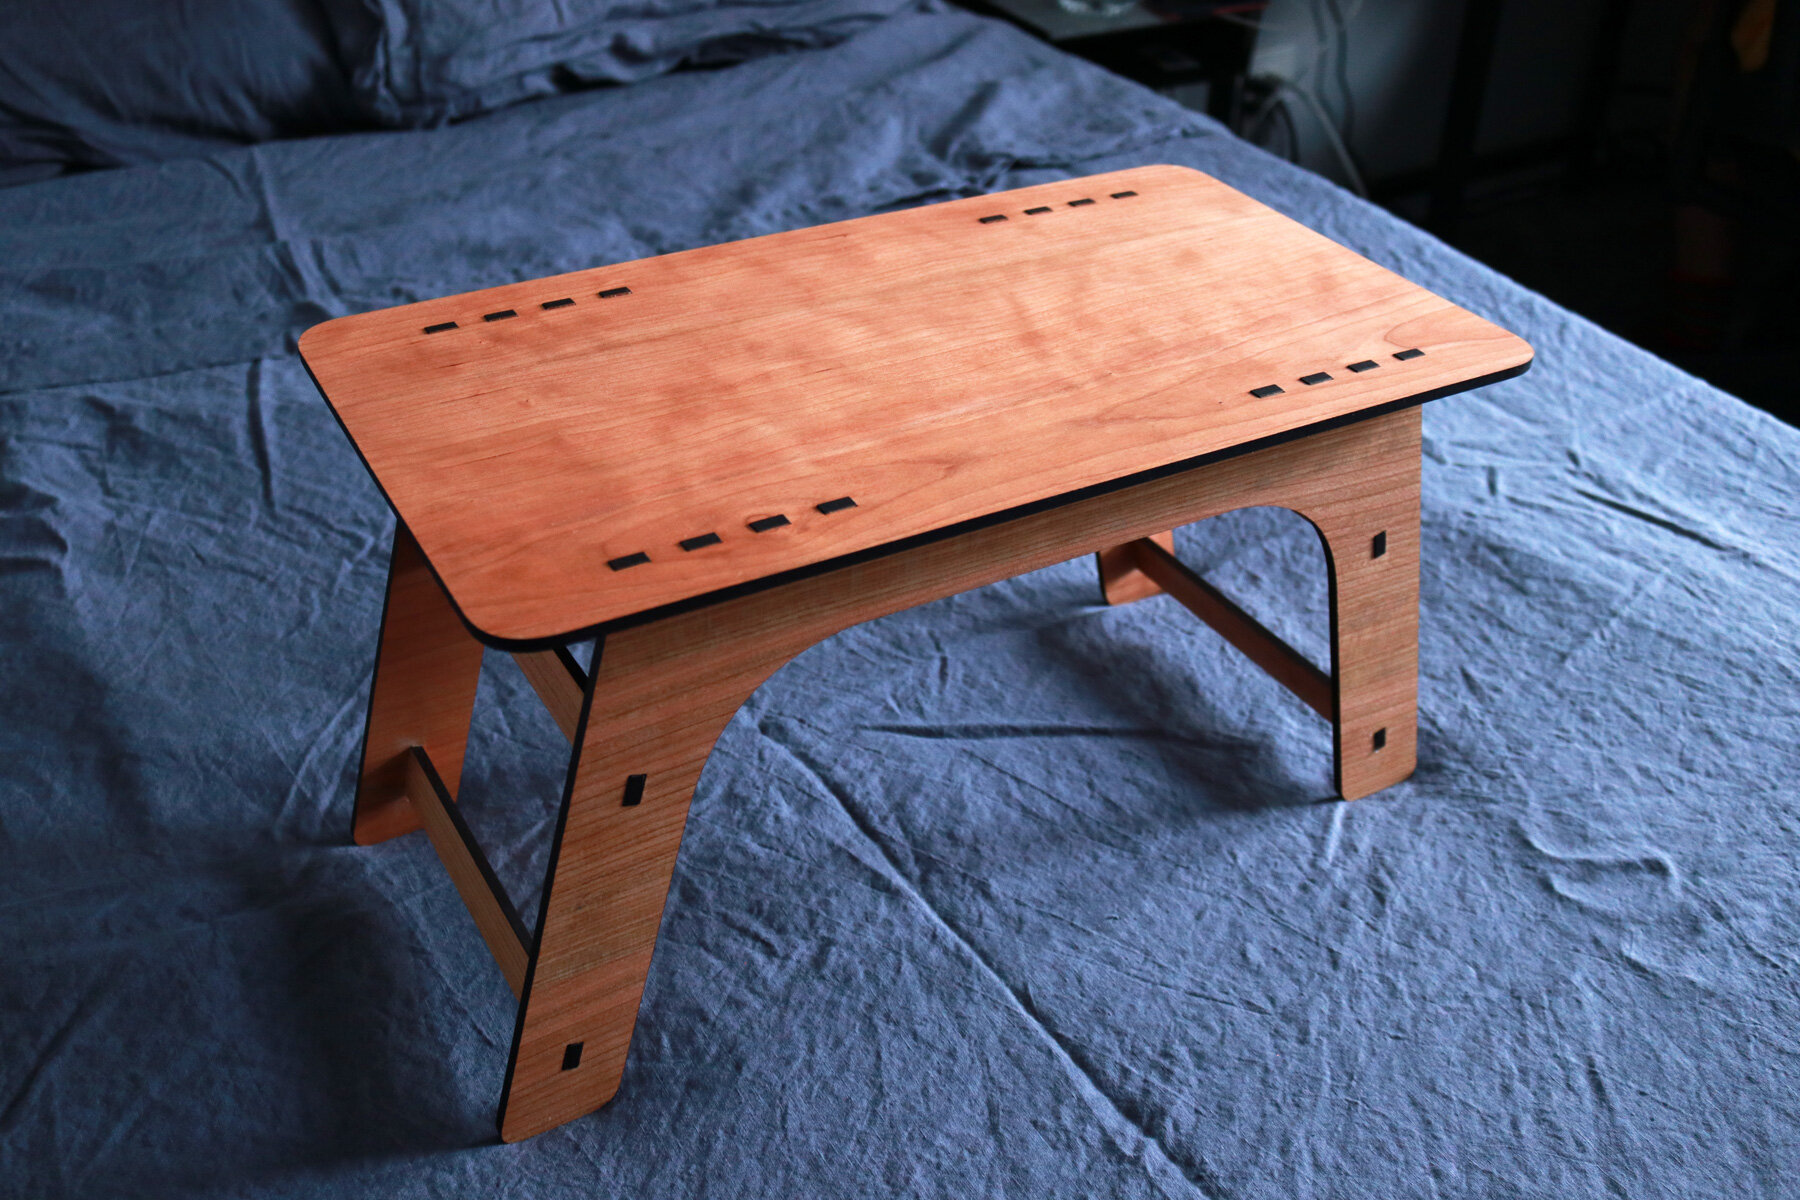 041_Minimal-Personal-Wood-Table-02.jpg